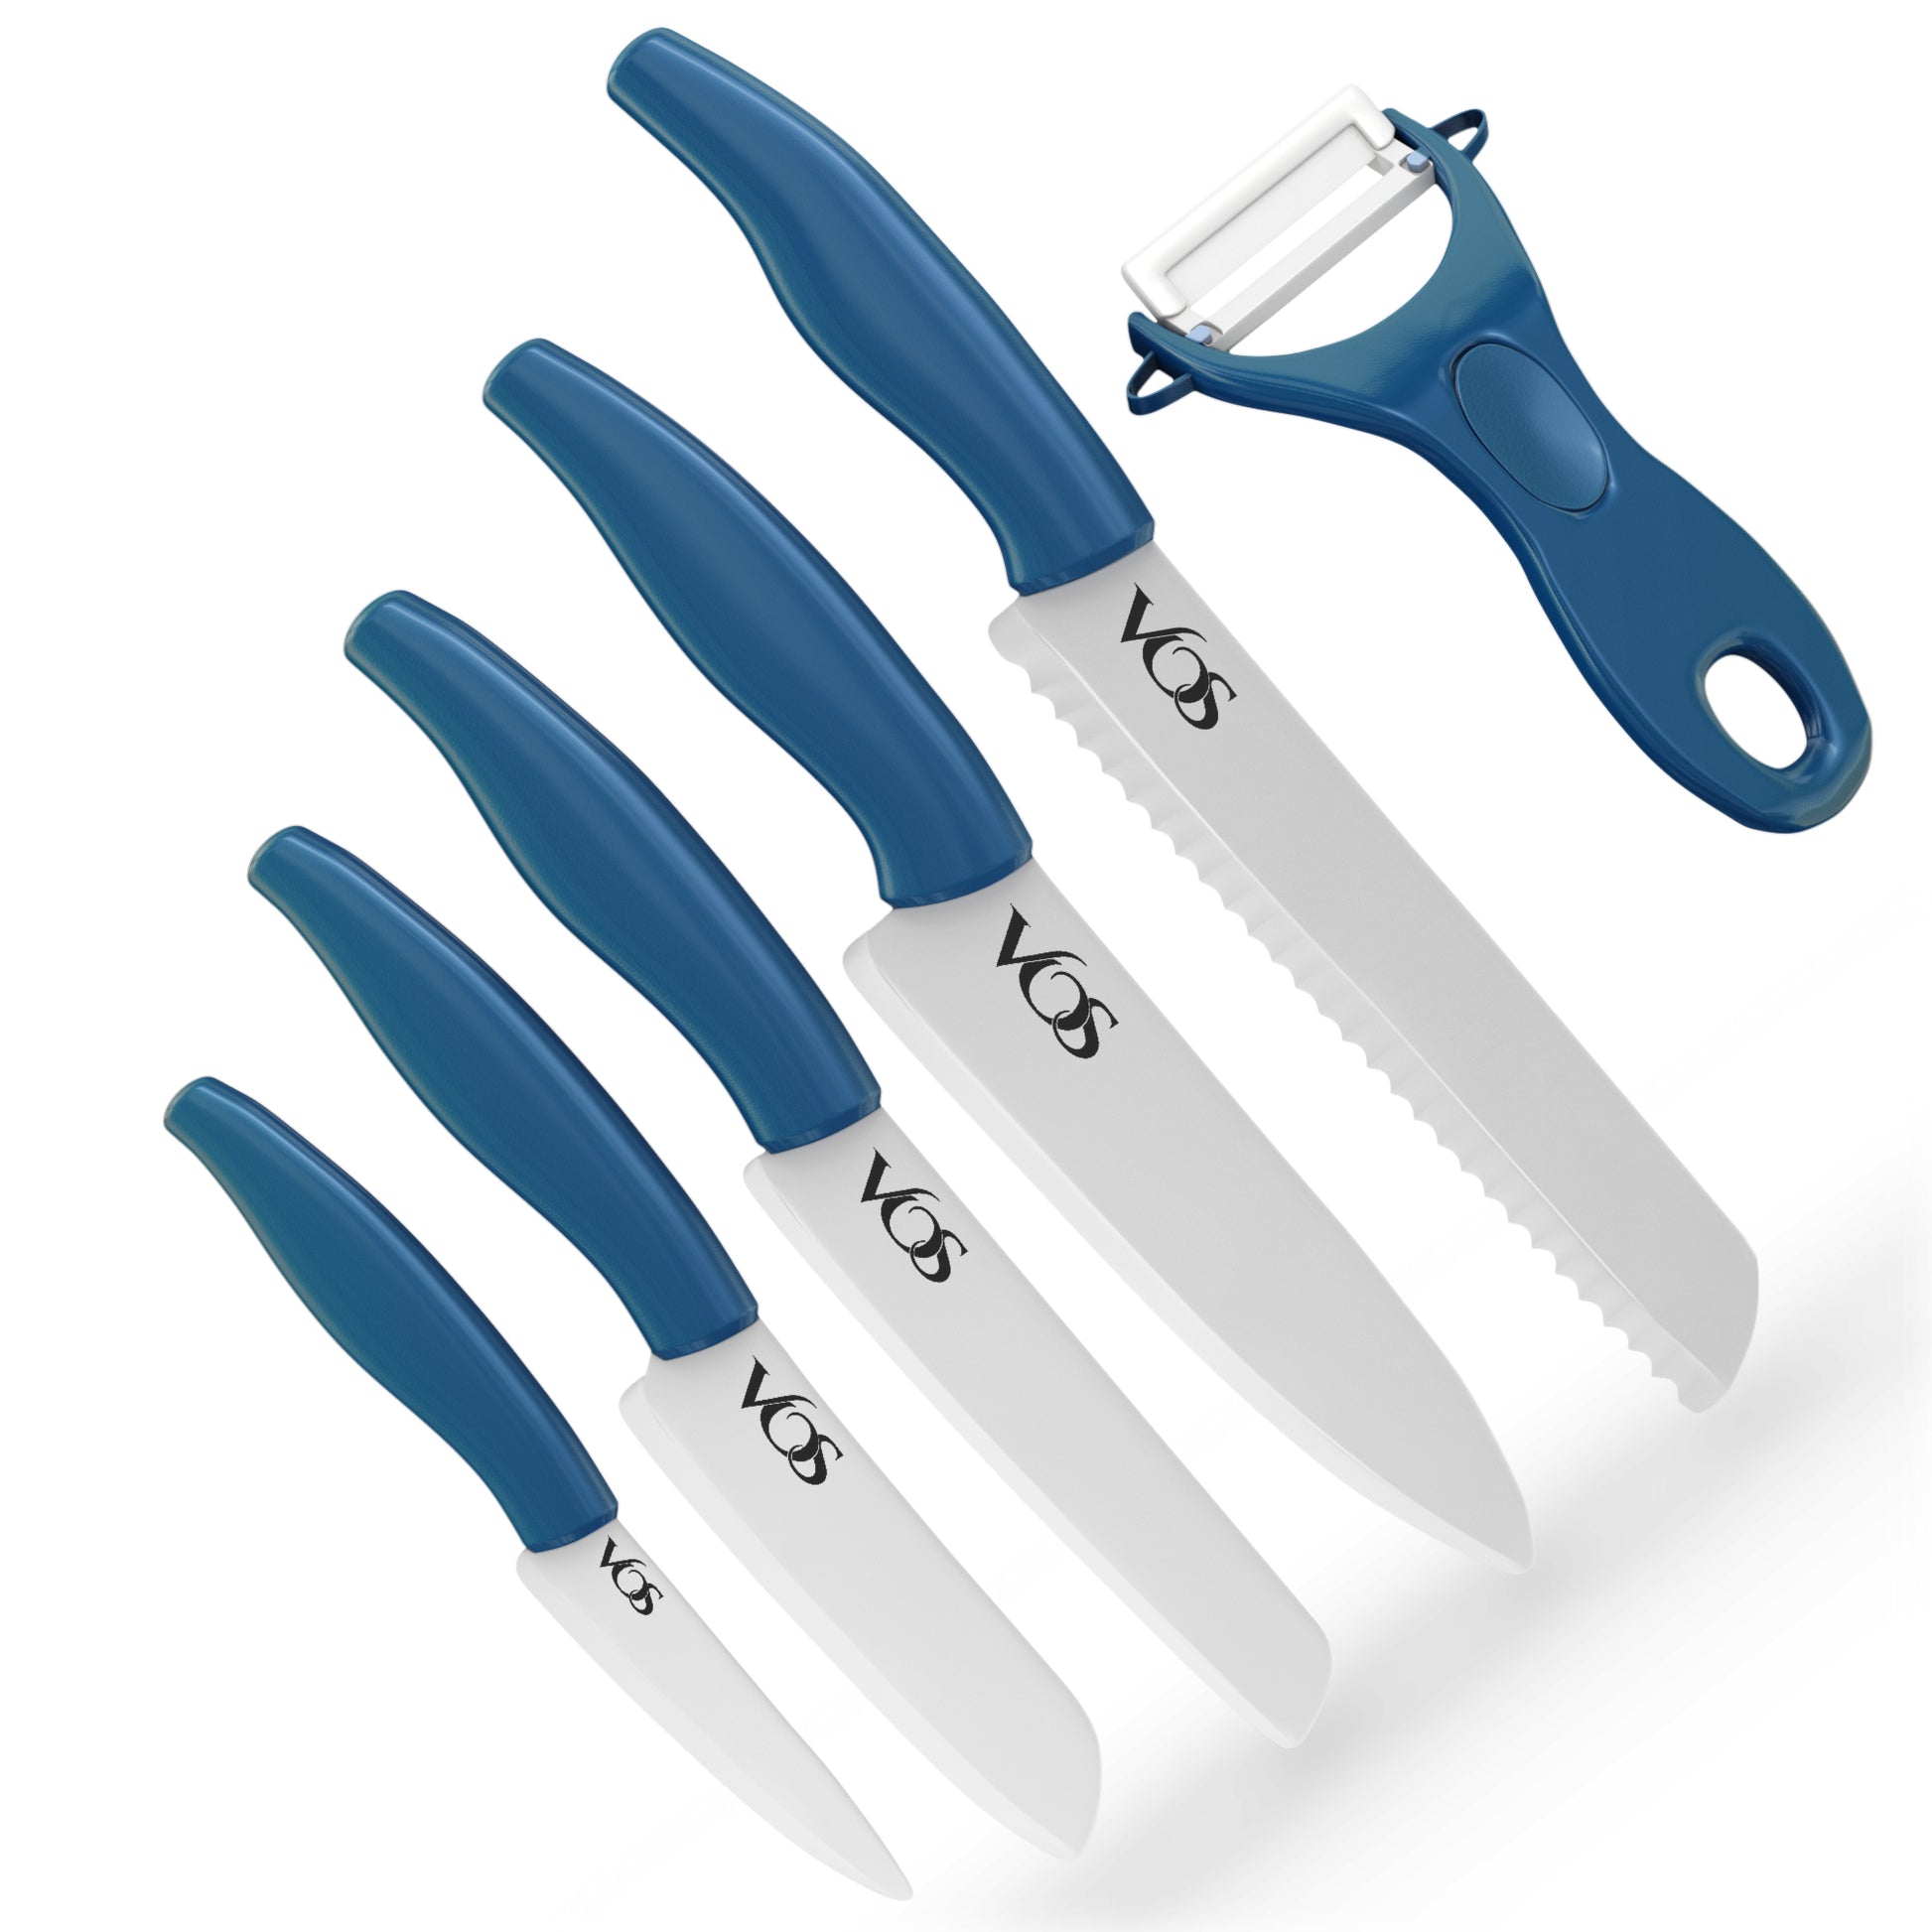 Ceramic Knife Set of Kitchen Knives 3 4 5 6 Inch Sharp Serrated